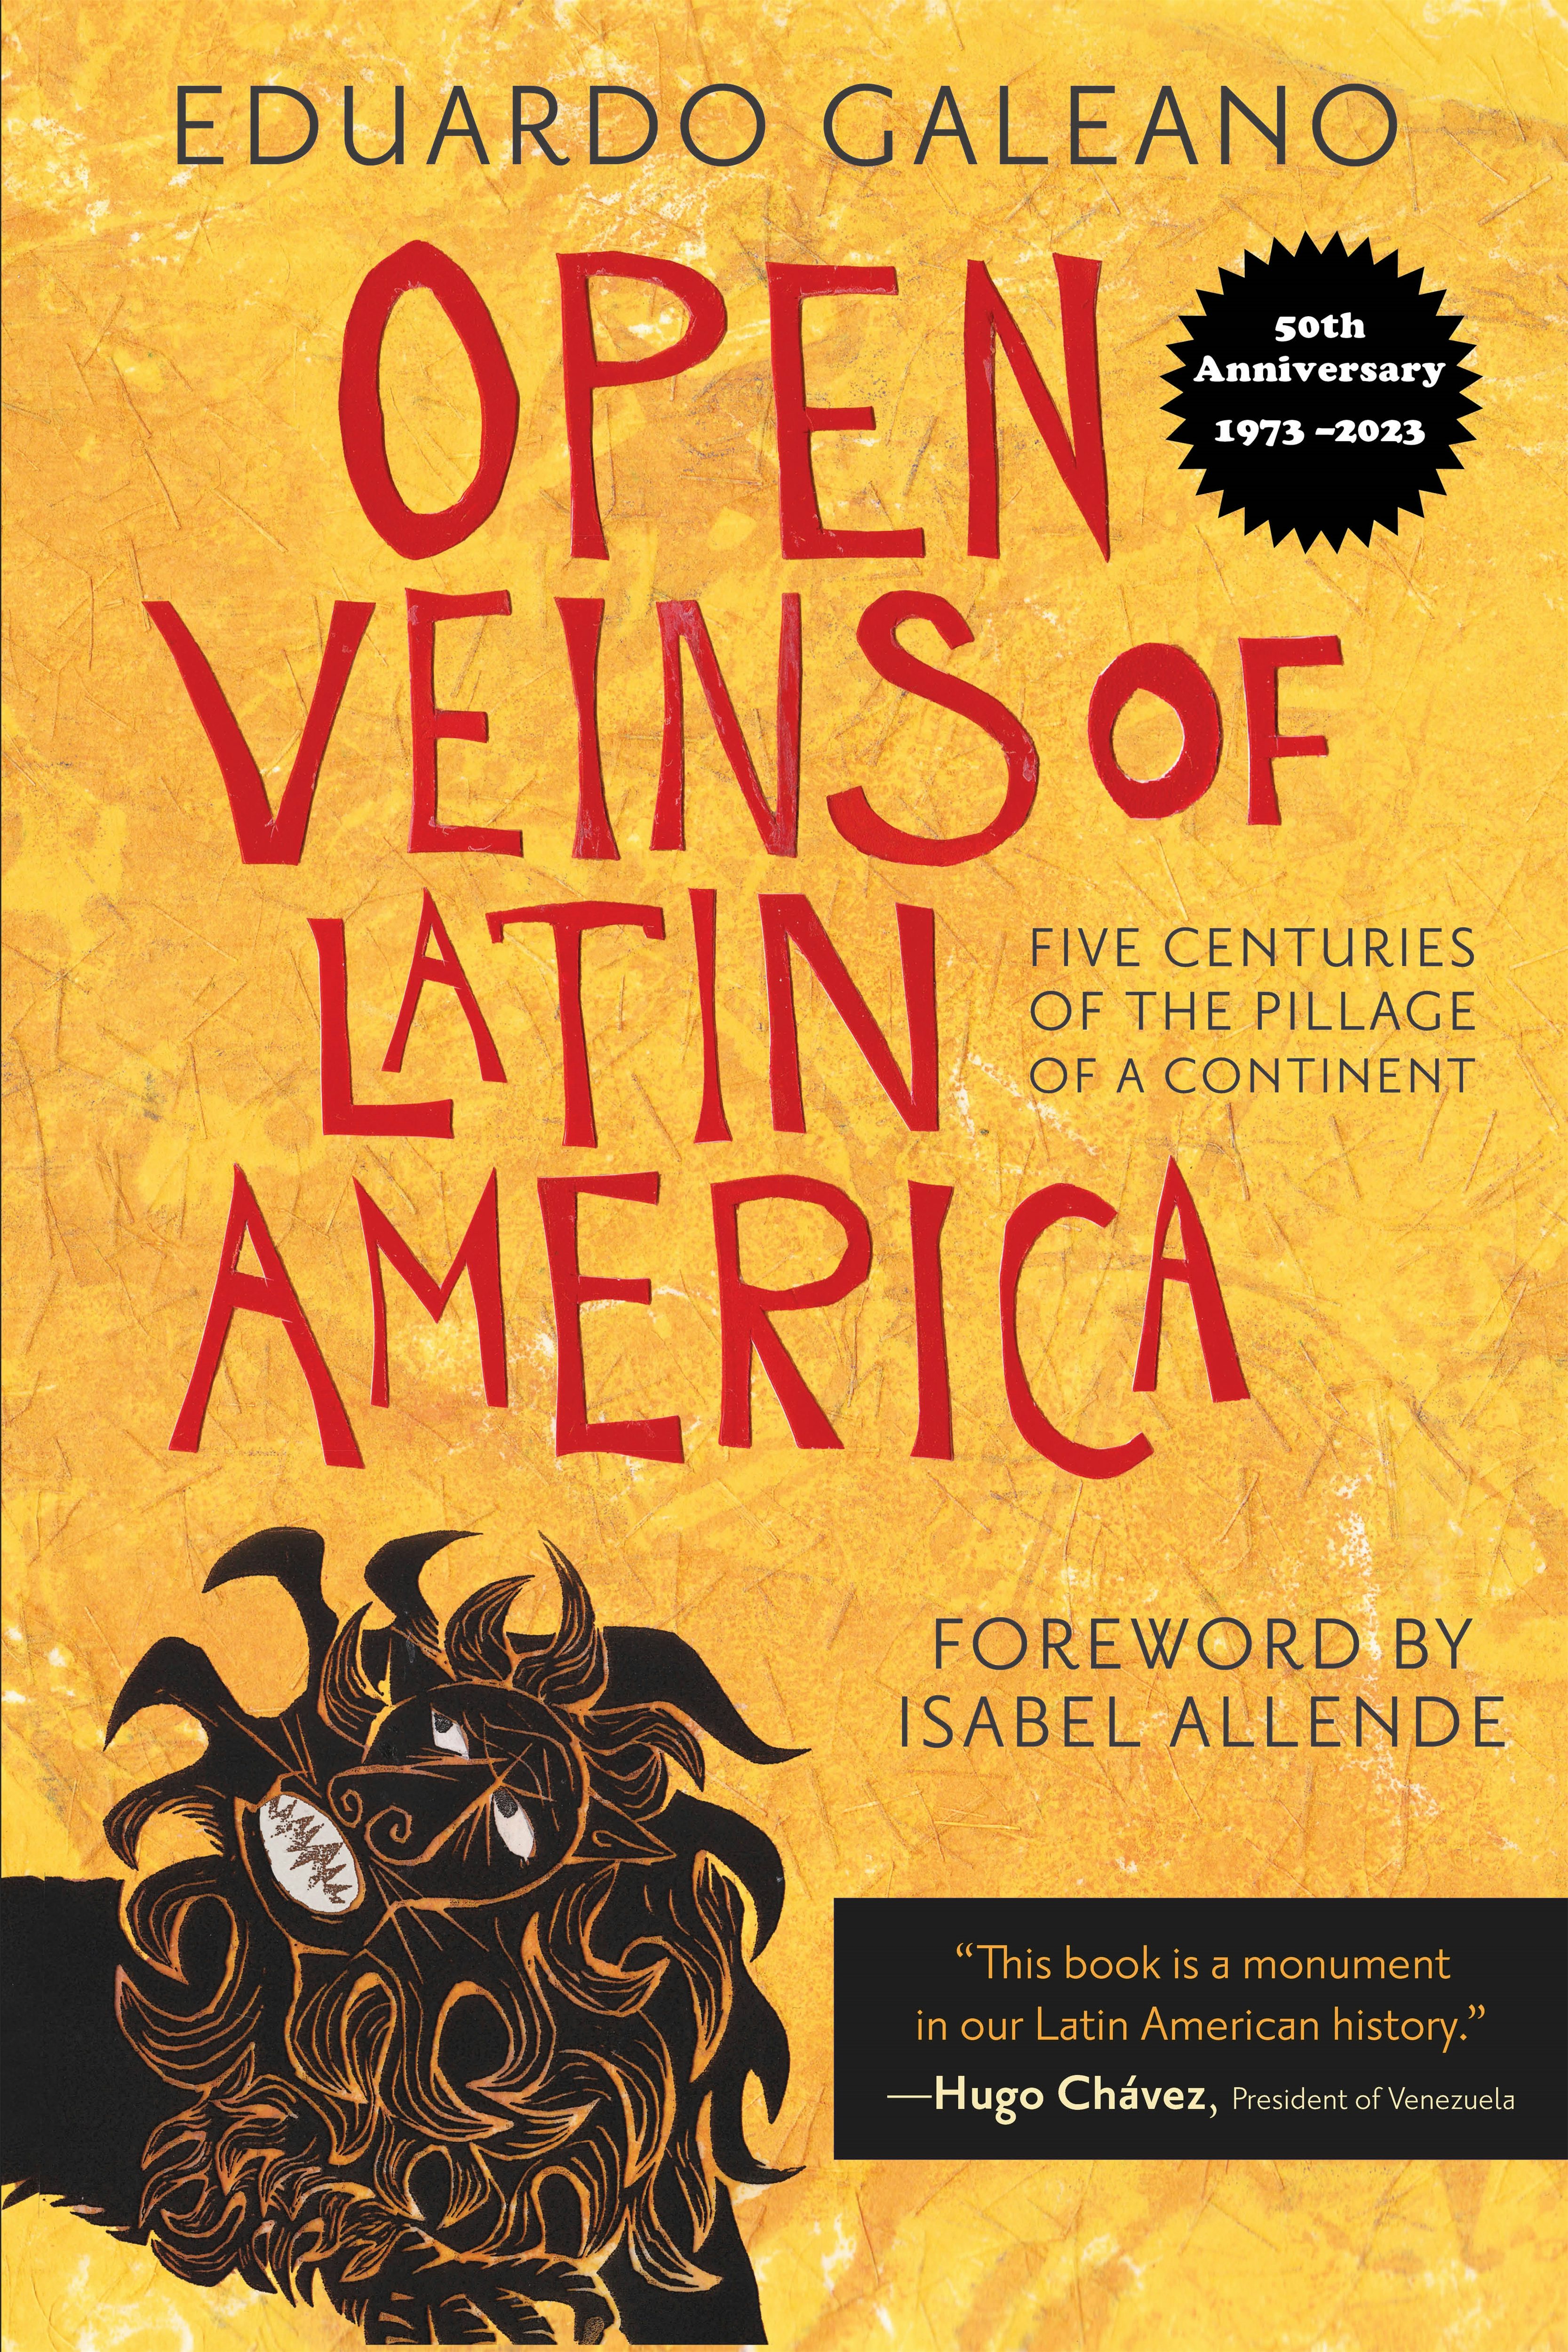 open the veins of latin america